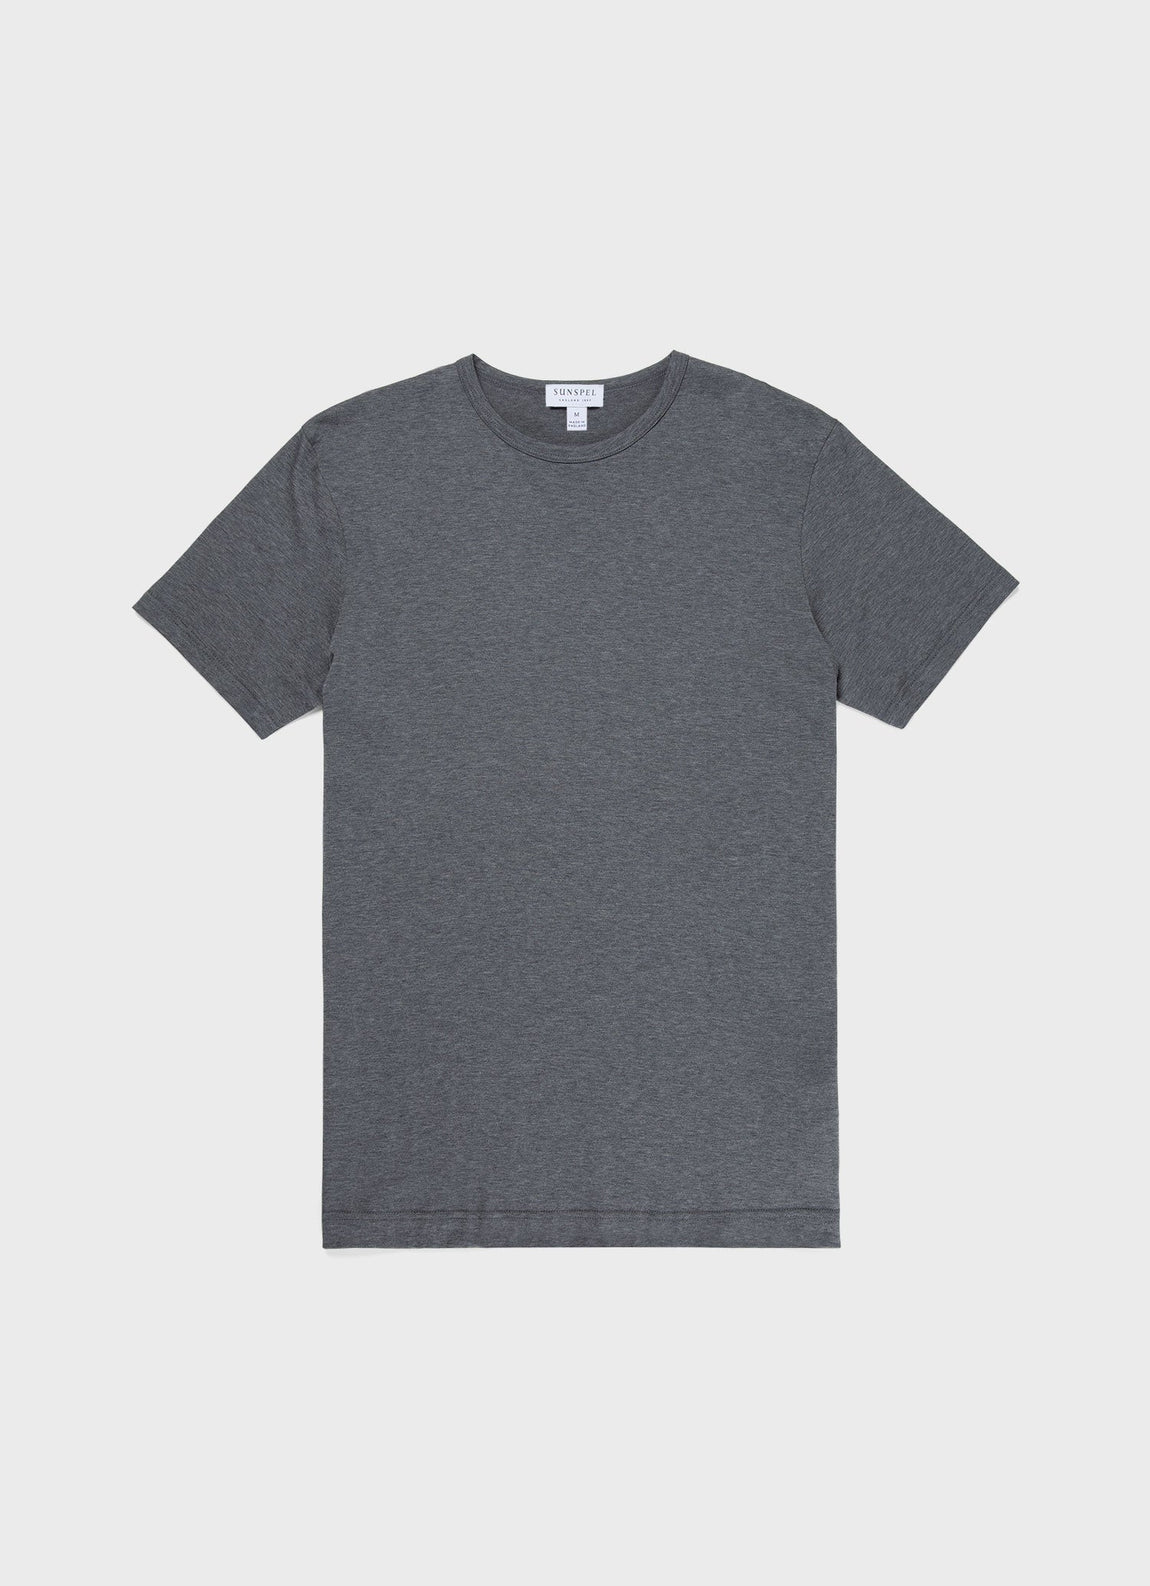 Men's Classic T-shirt in Charcoal Melange | Sunspel